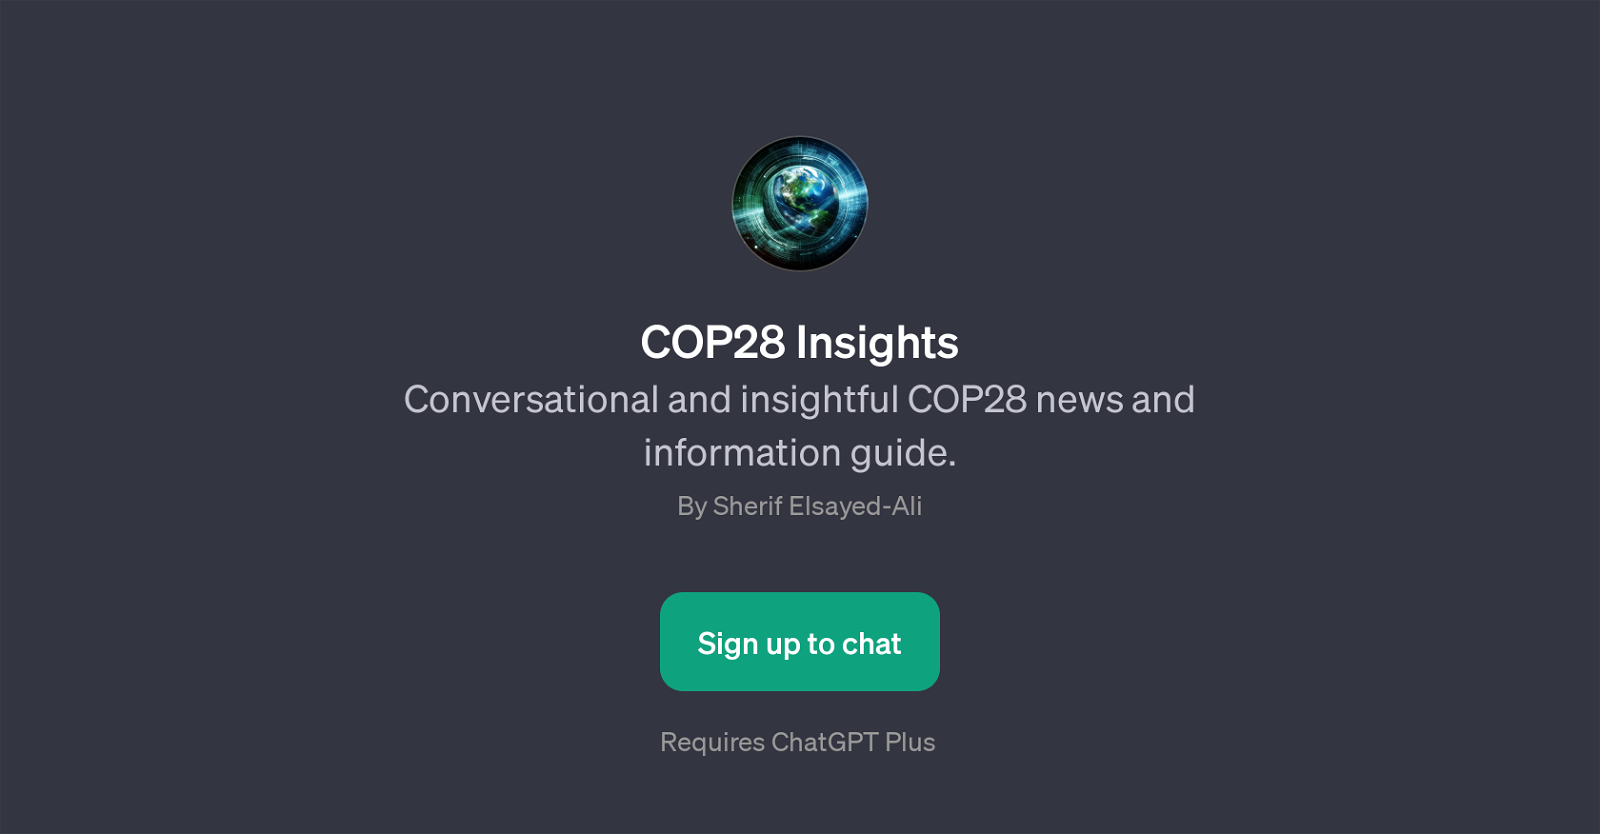 COP28 Insights website